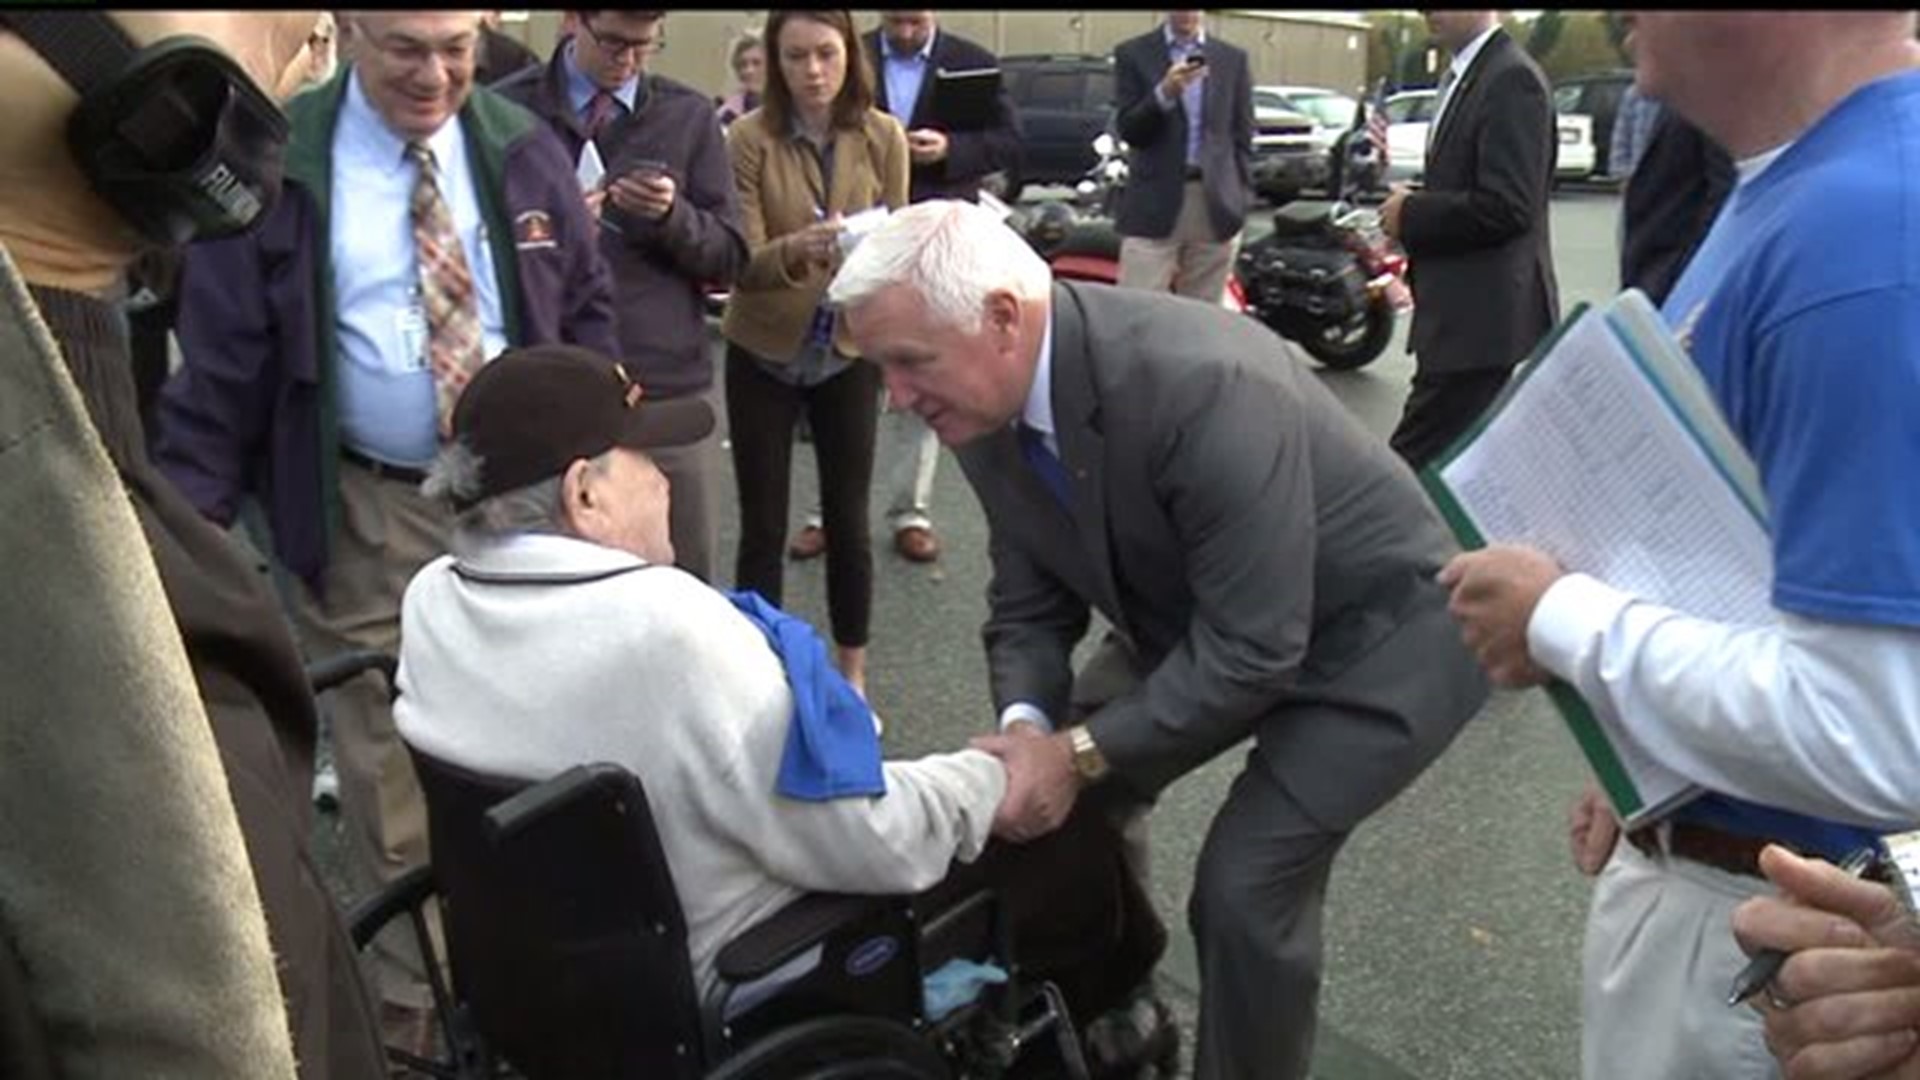 Gov. Corbett takes part in special veteran send-off